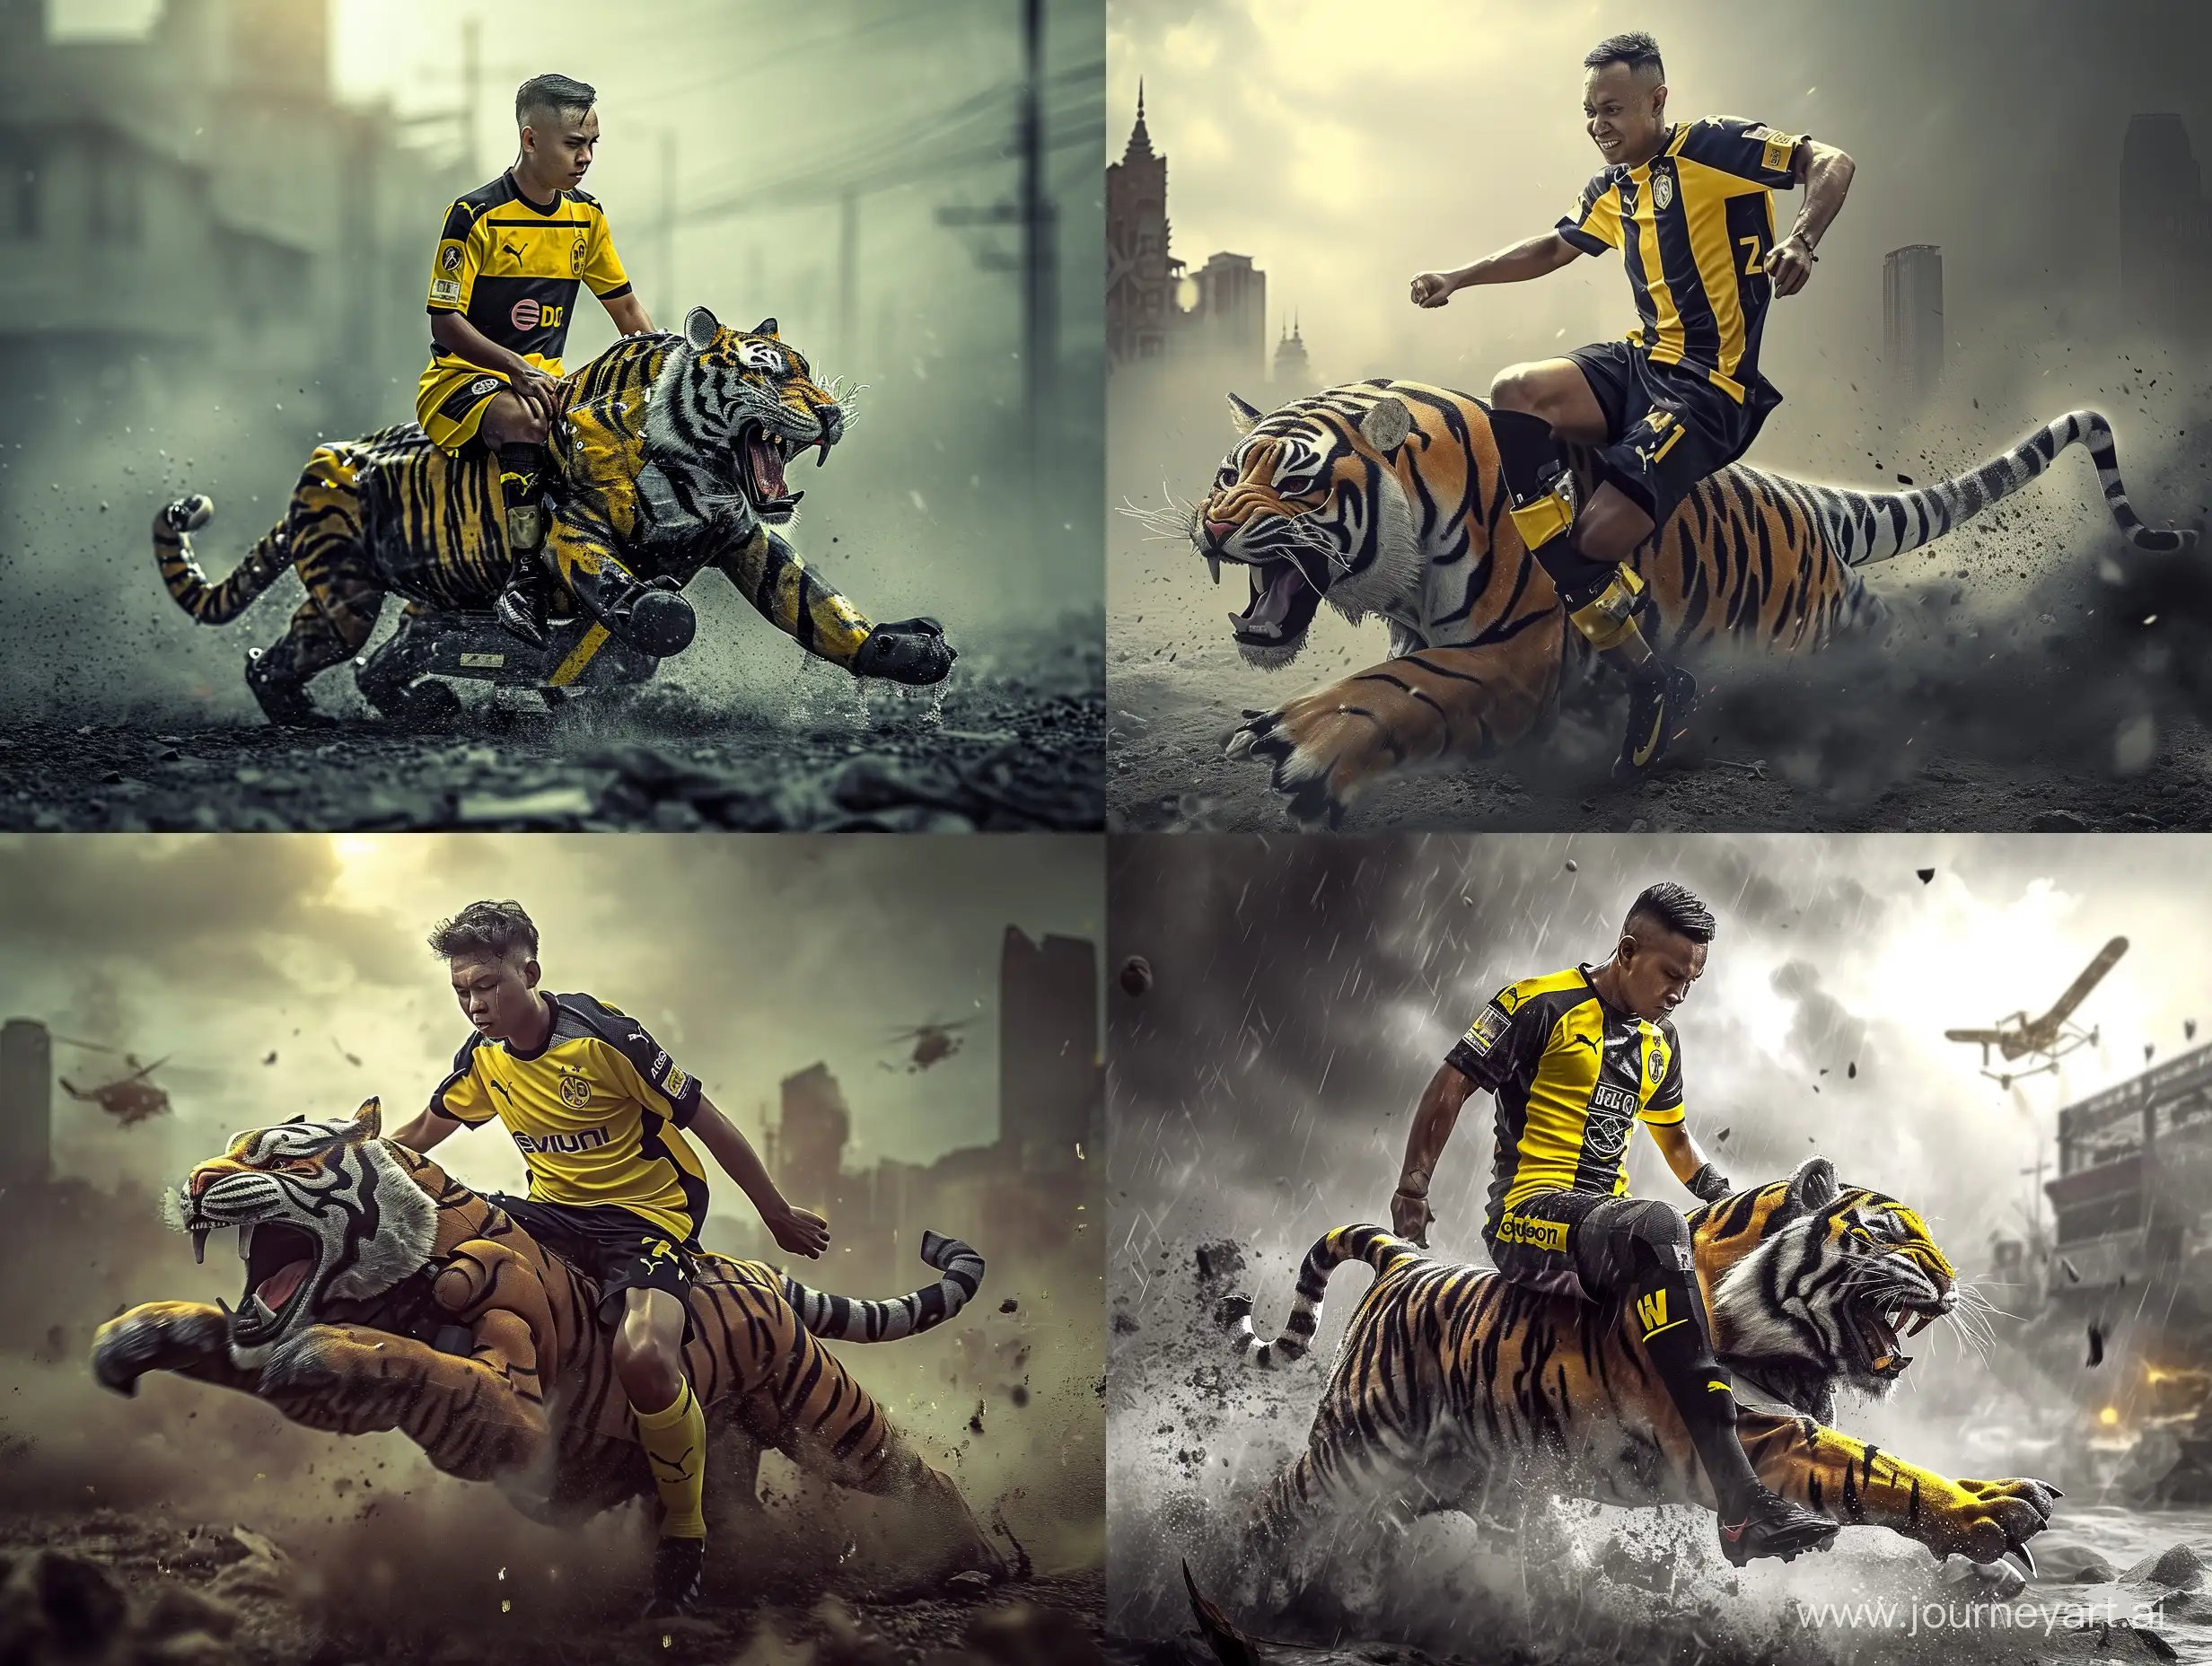 Malaysian-Footballer-Riding-Tiger-Robot-in-Epic-Battle-Scene